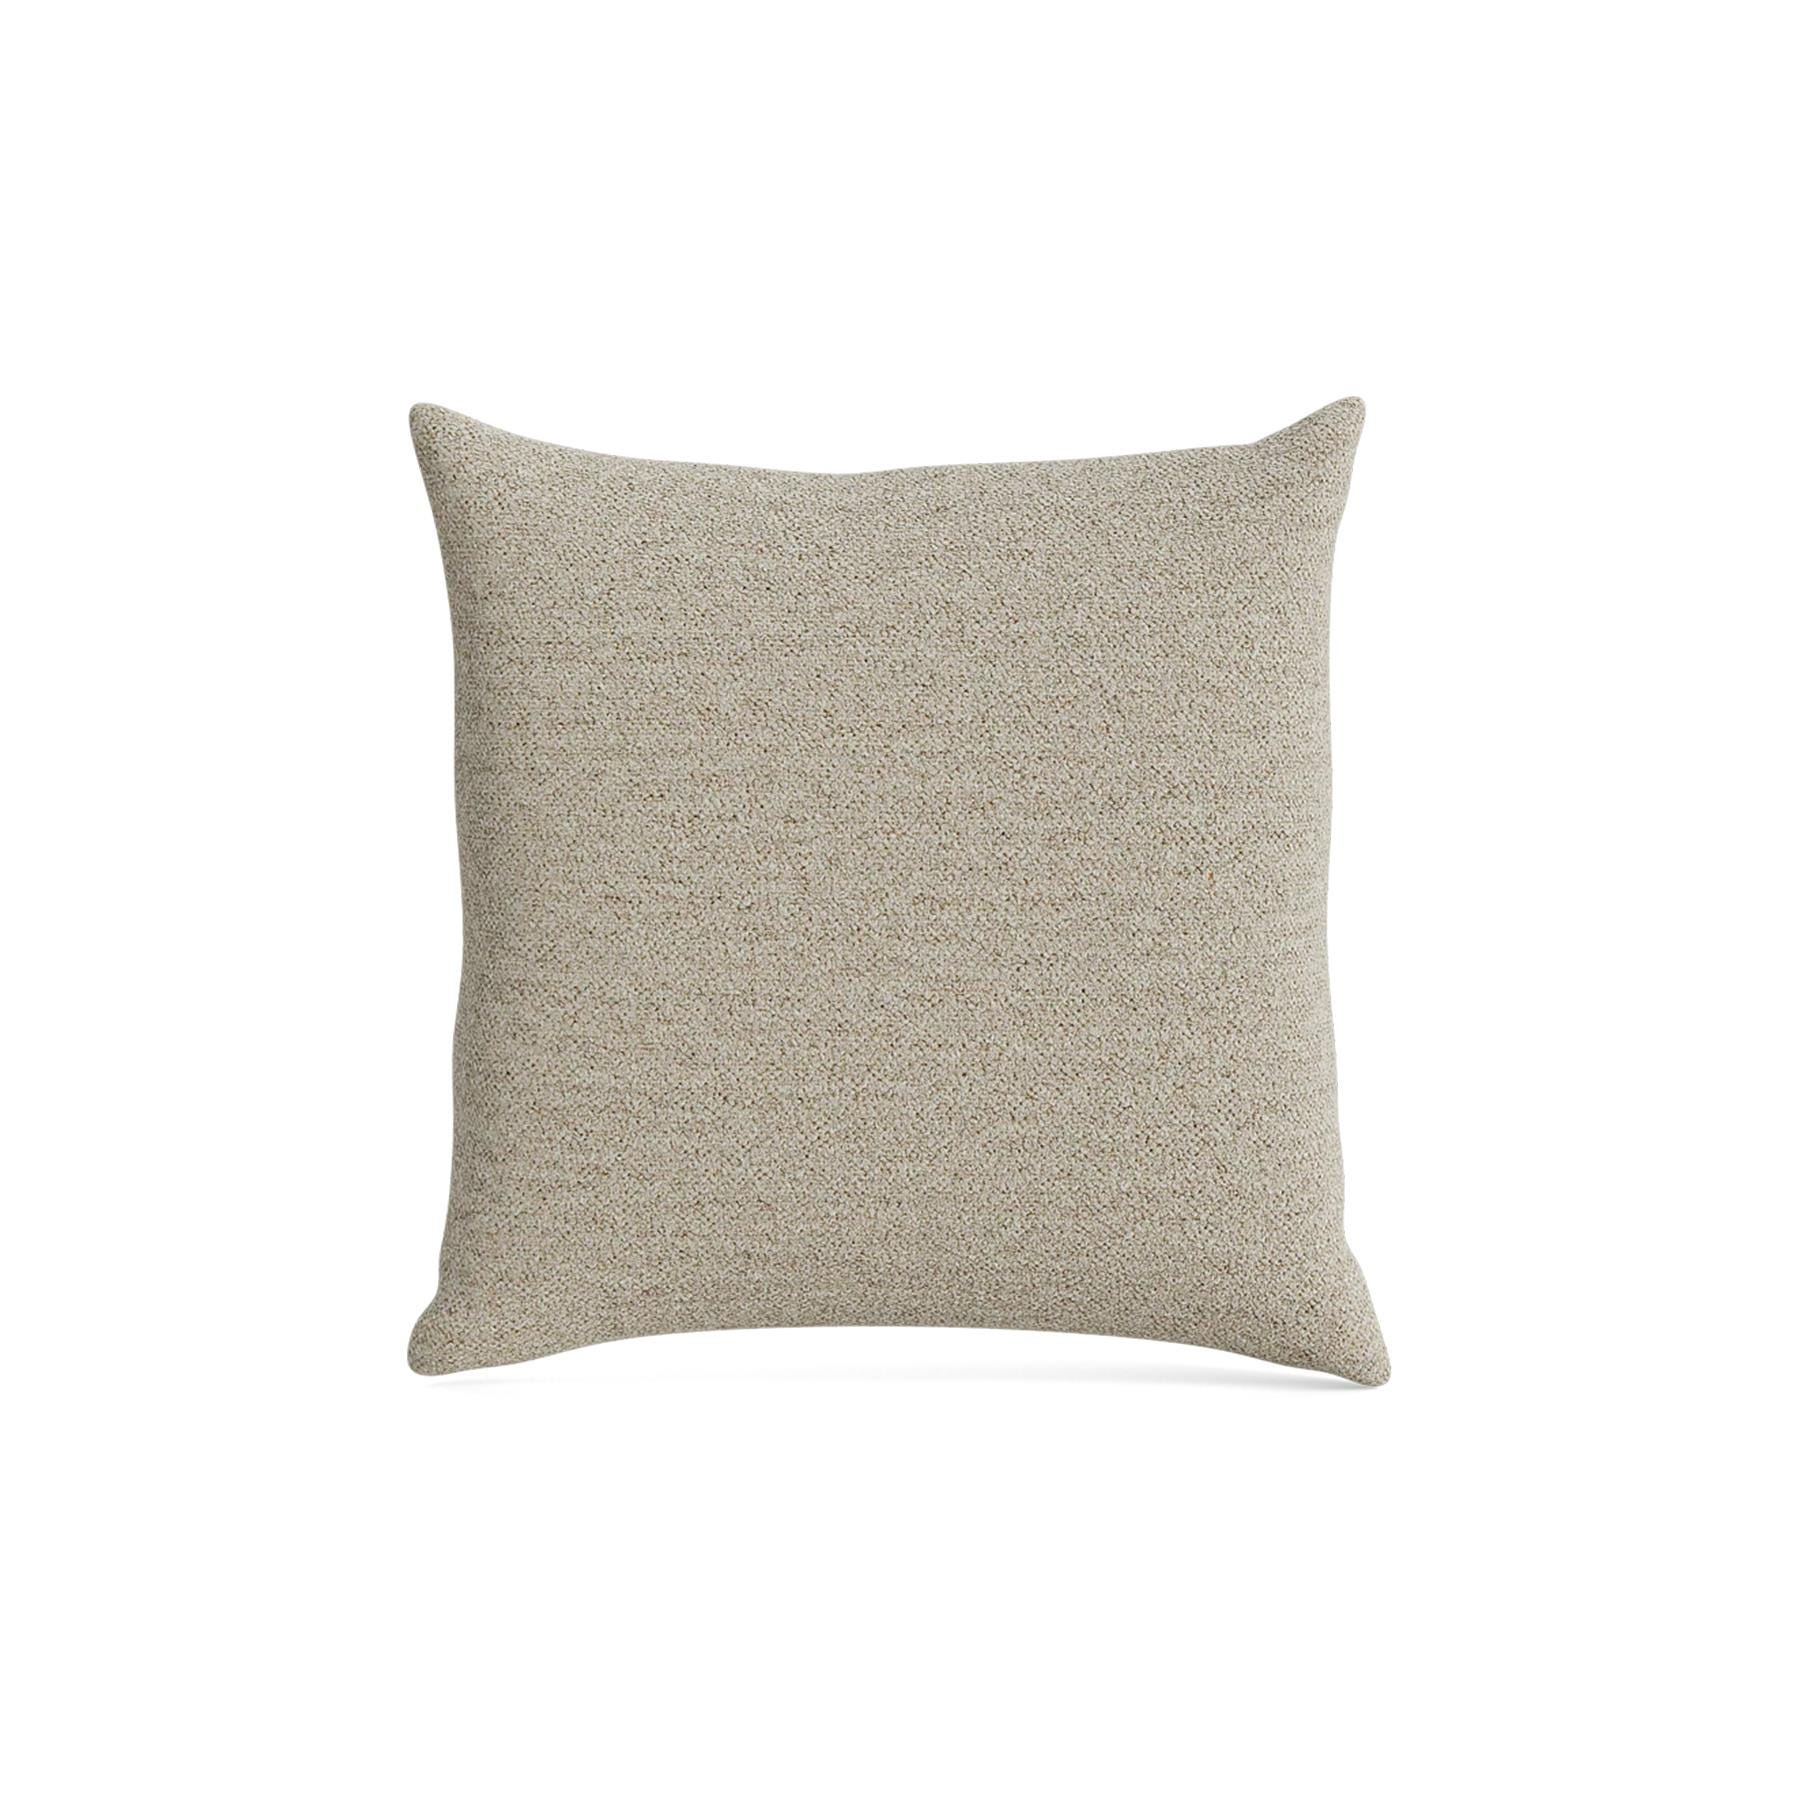 Make Nordic Pillow 40cmx40cm Nature Boucle 02 Down And Fibers Cream